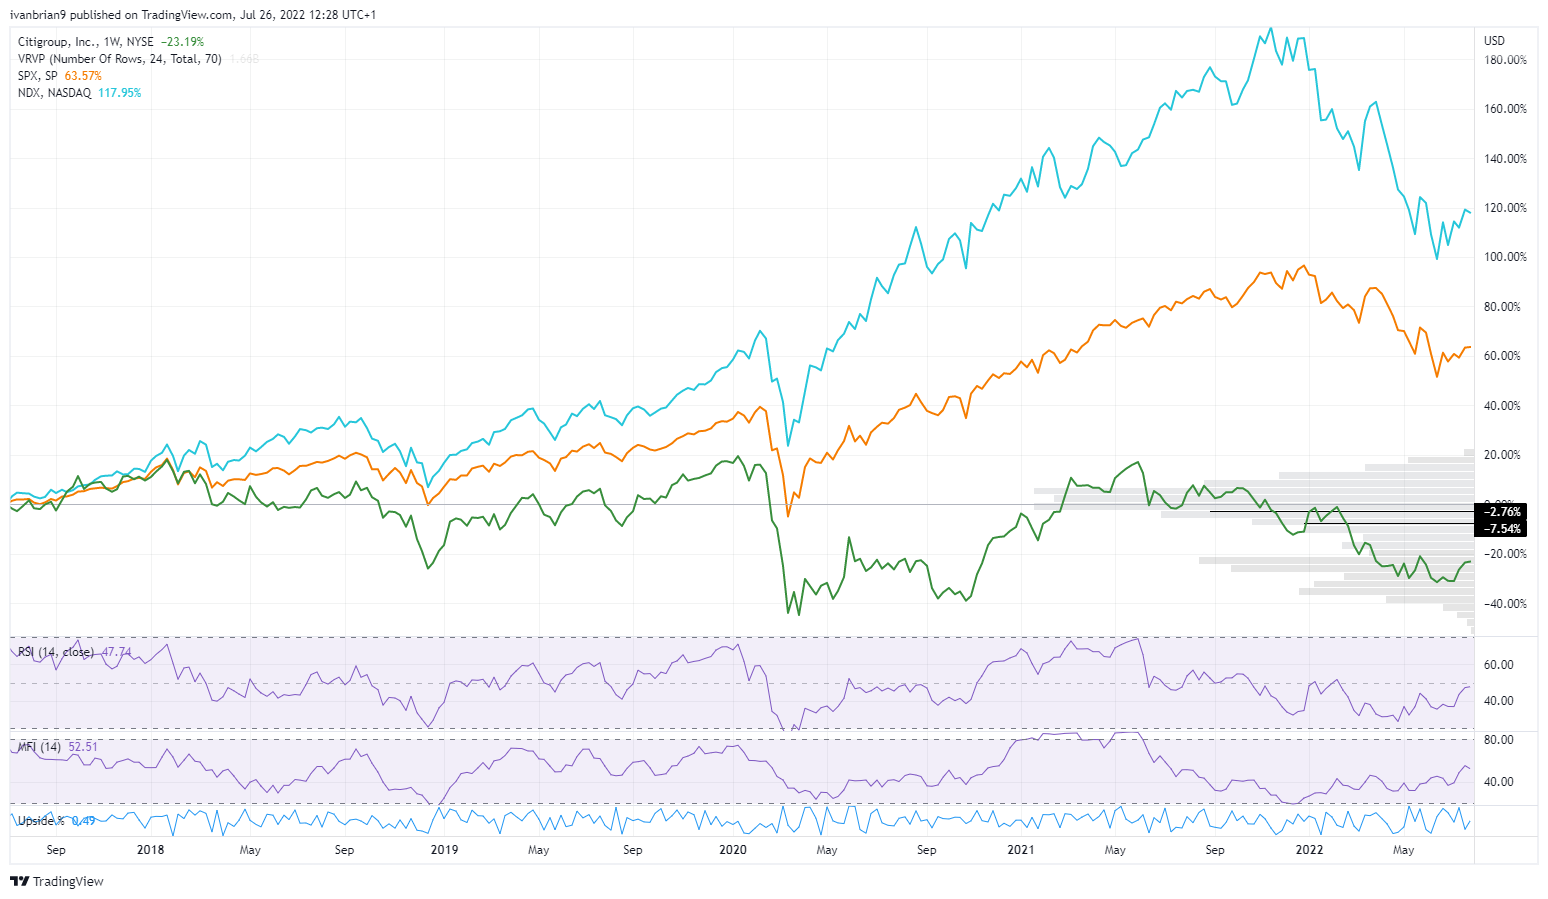 C stock vs main indices